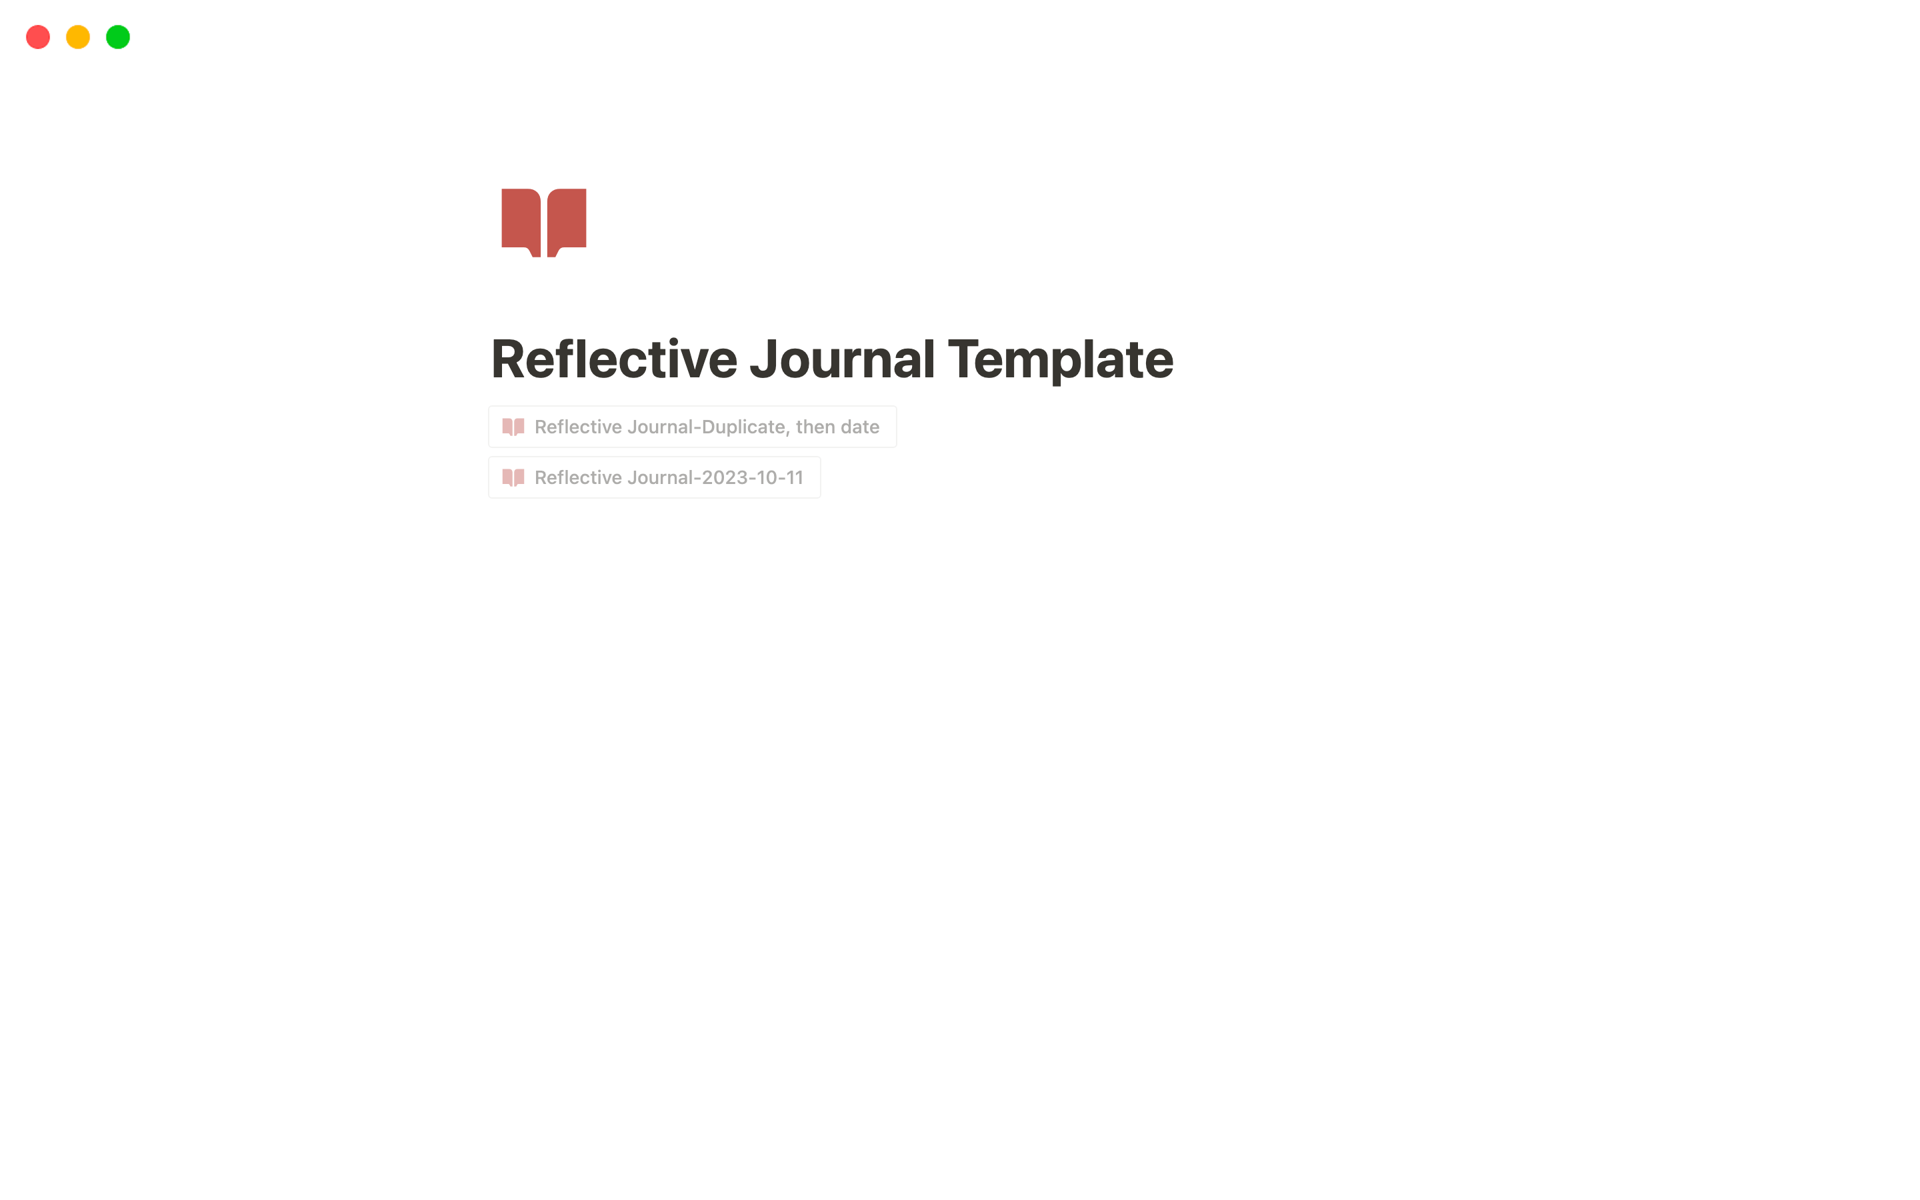 Vista previa de una plantilla para Reflective Journal Template